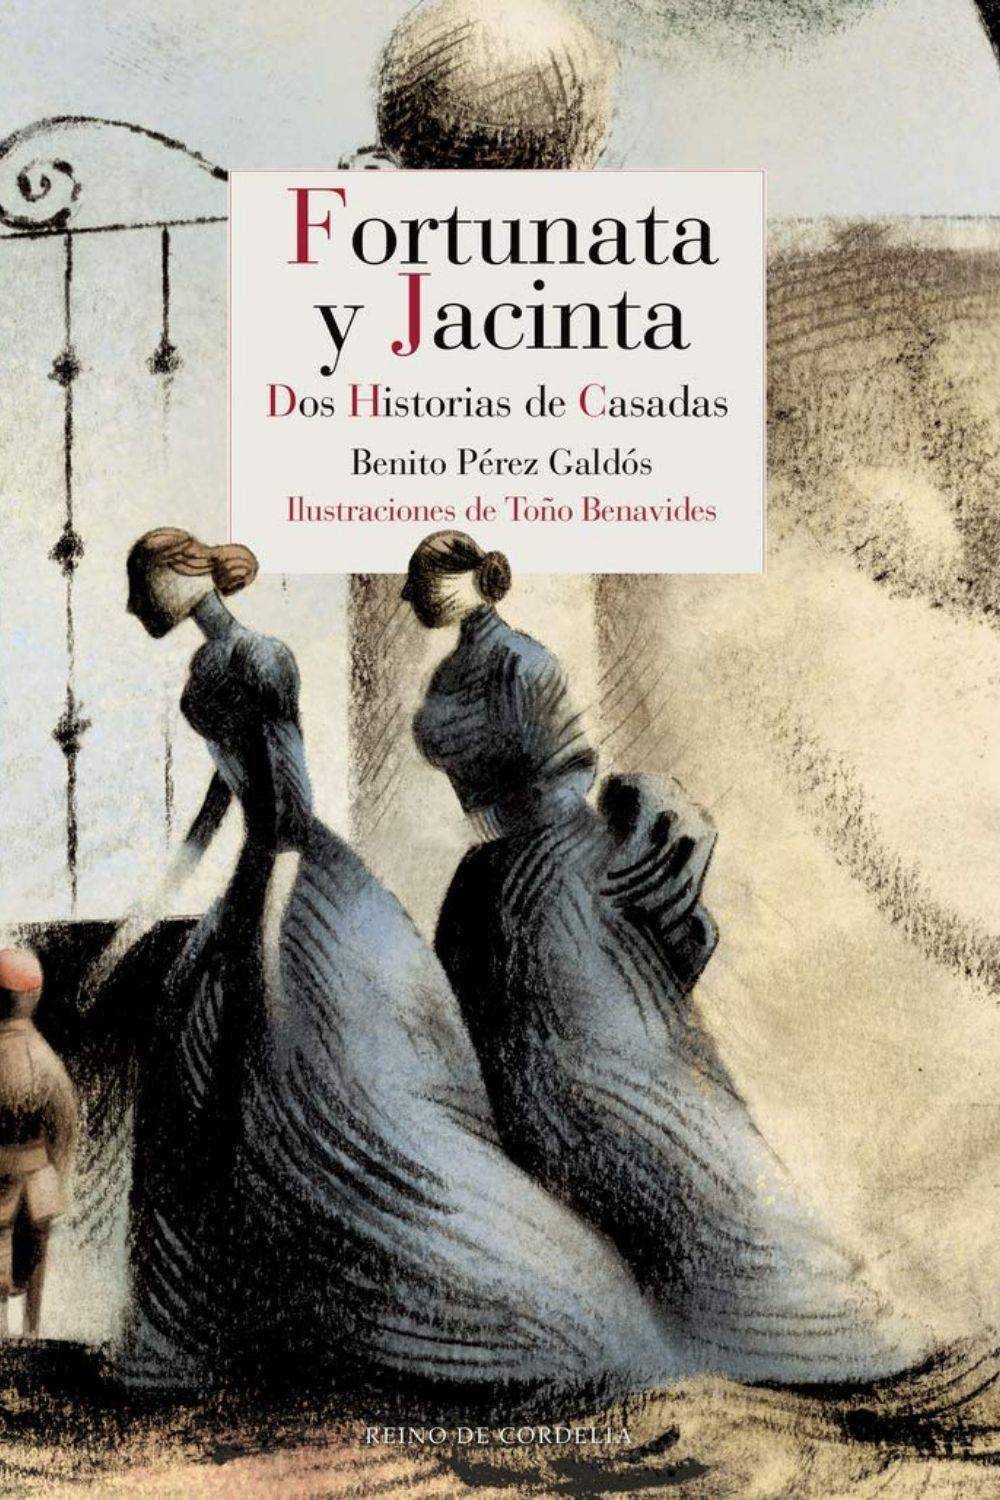 ‘Fortunata y Jacinta’ de Benito Pérez Galdós